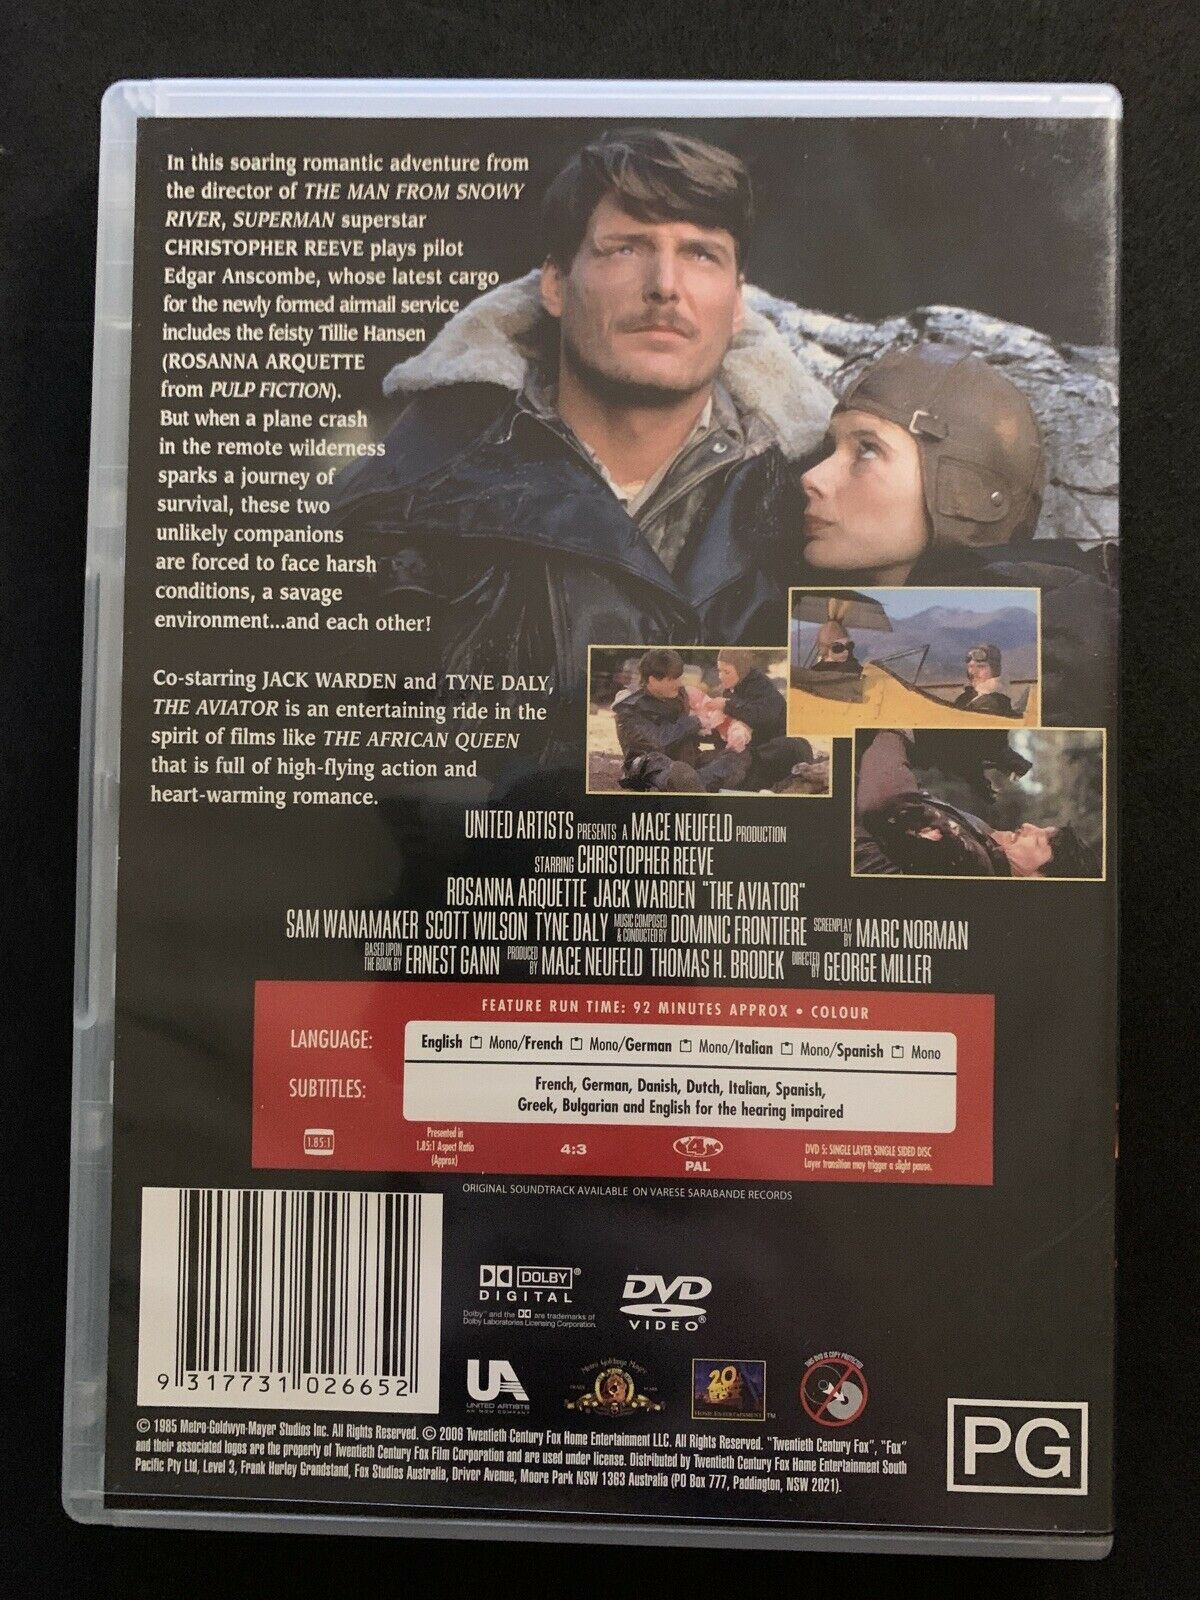 The Aviator (DVD, 1985) Christopher Reeve, Rosanna Arquette - Region 4